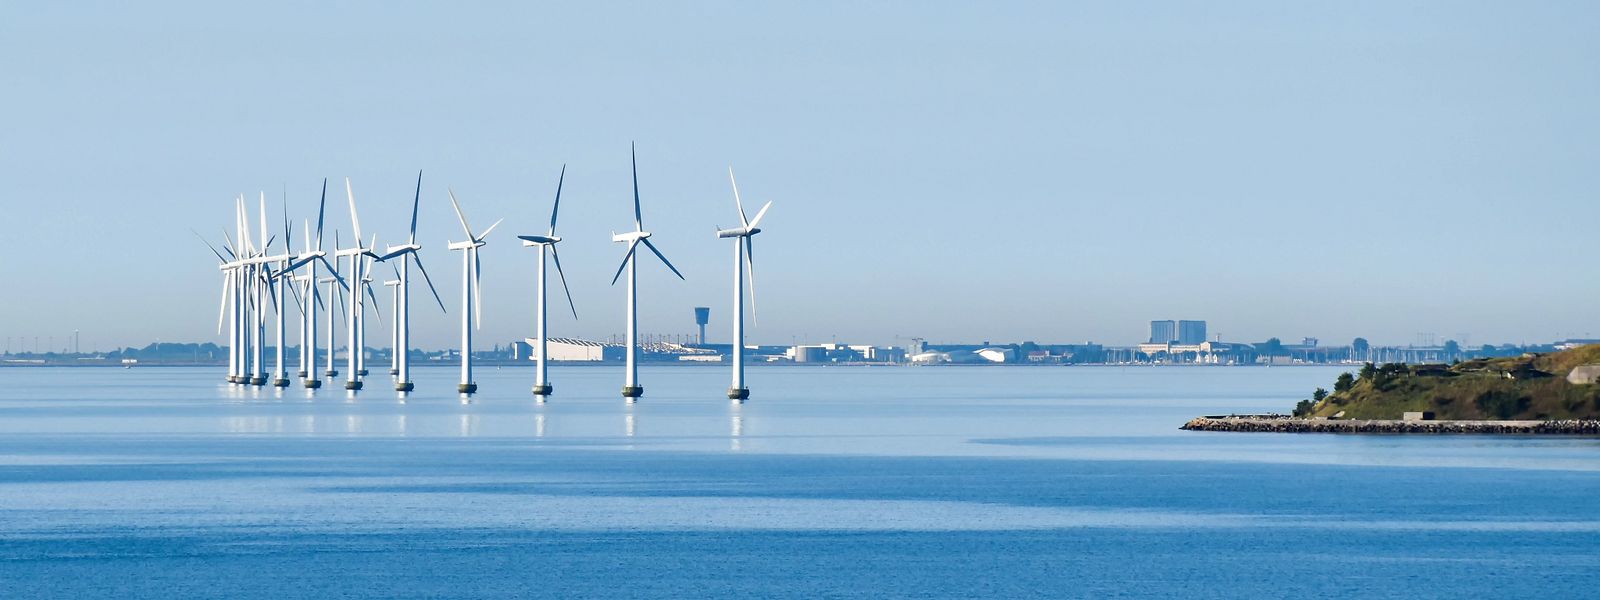 Offshore windmill farm Copenhagen